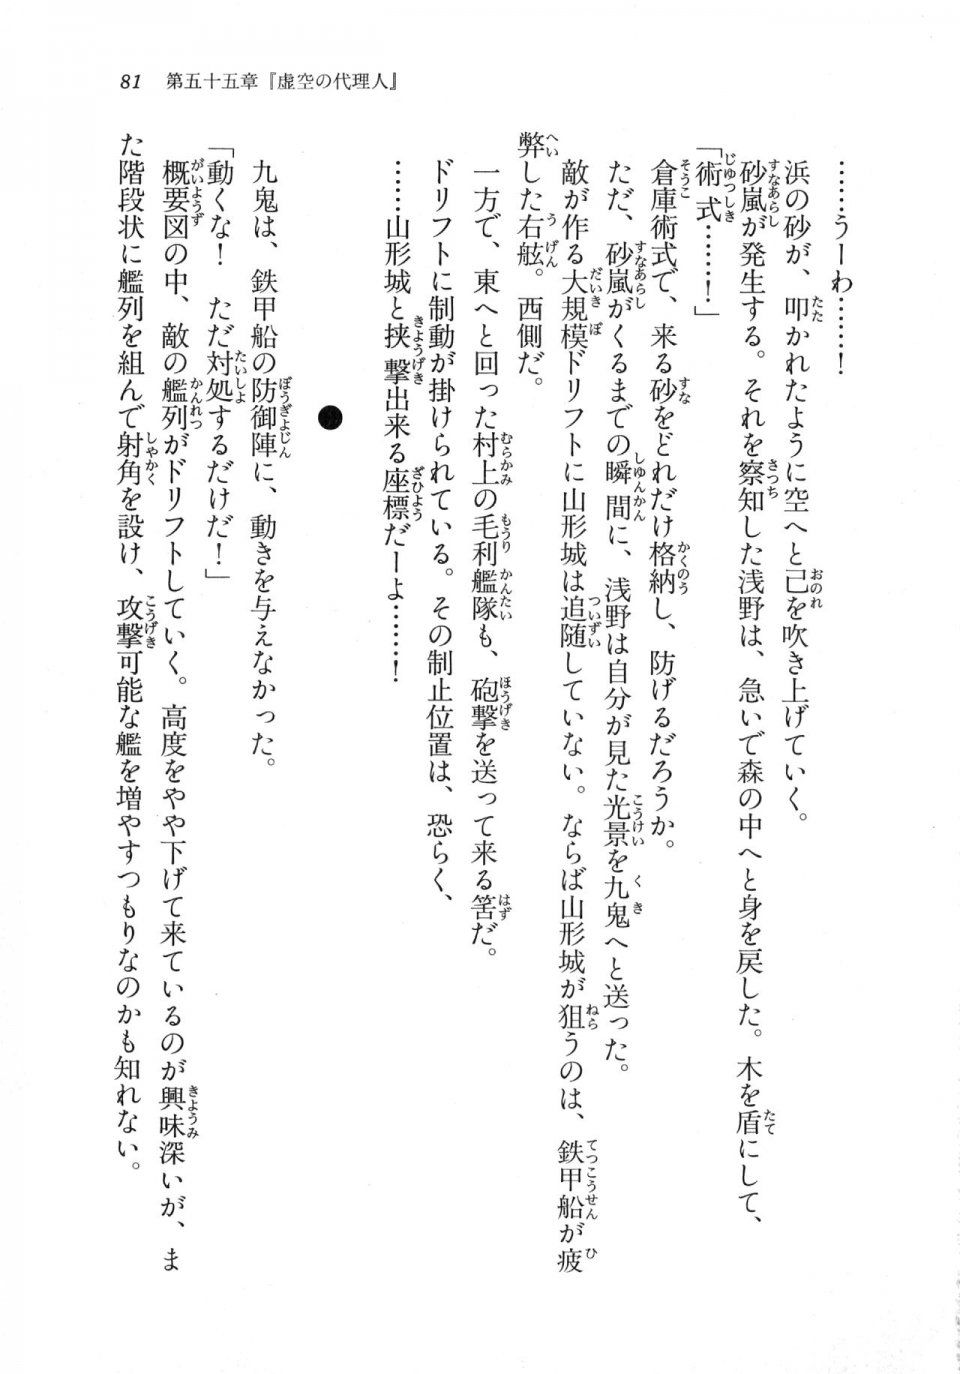 Kyoukai Senjou no Horizon LN Vol 18(7C) Part 1 - Photo #81